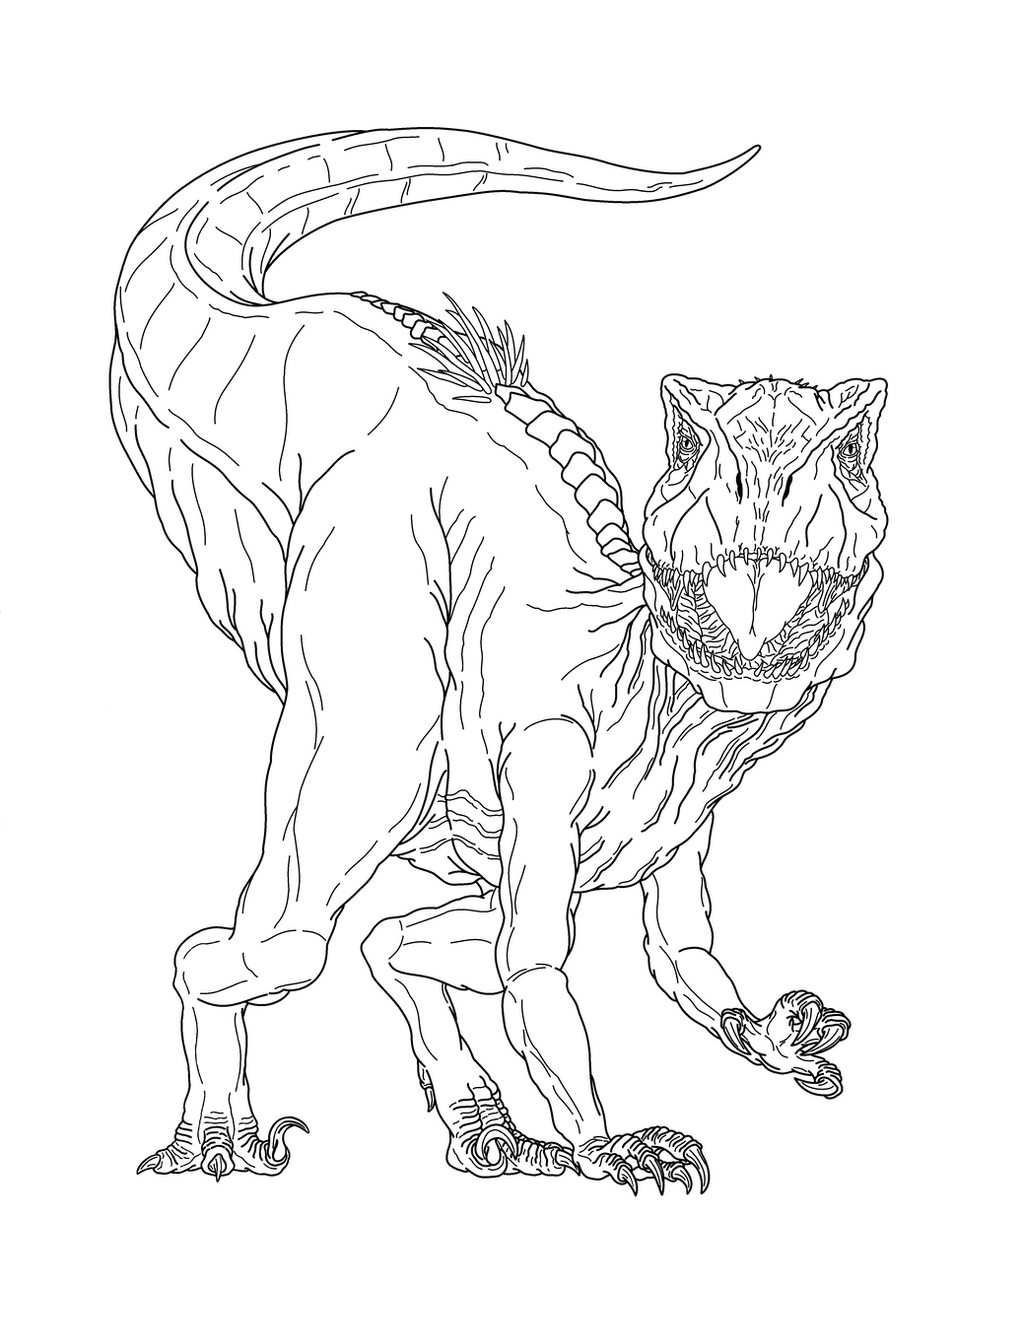 Skyyler in Indoraptor form by opulencesky on DeviantArt